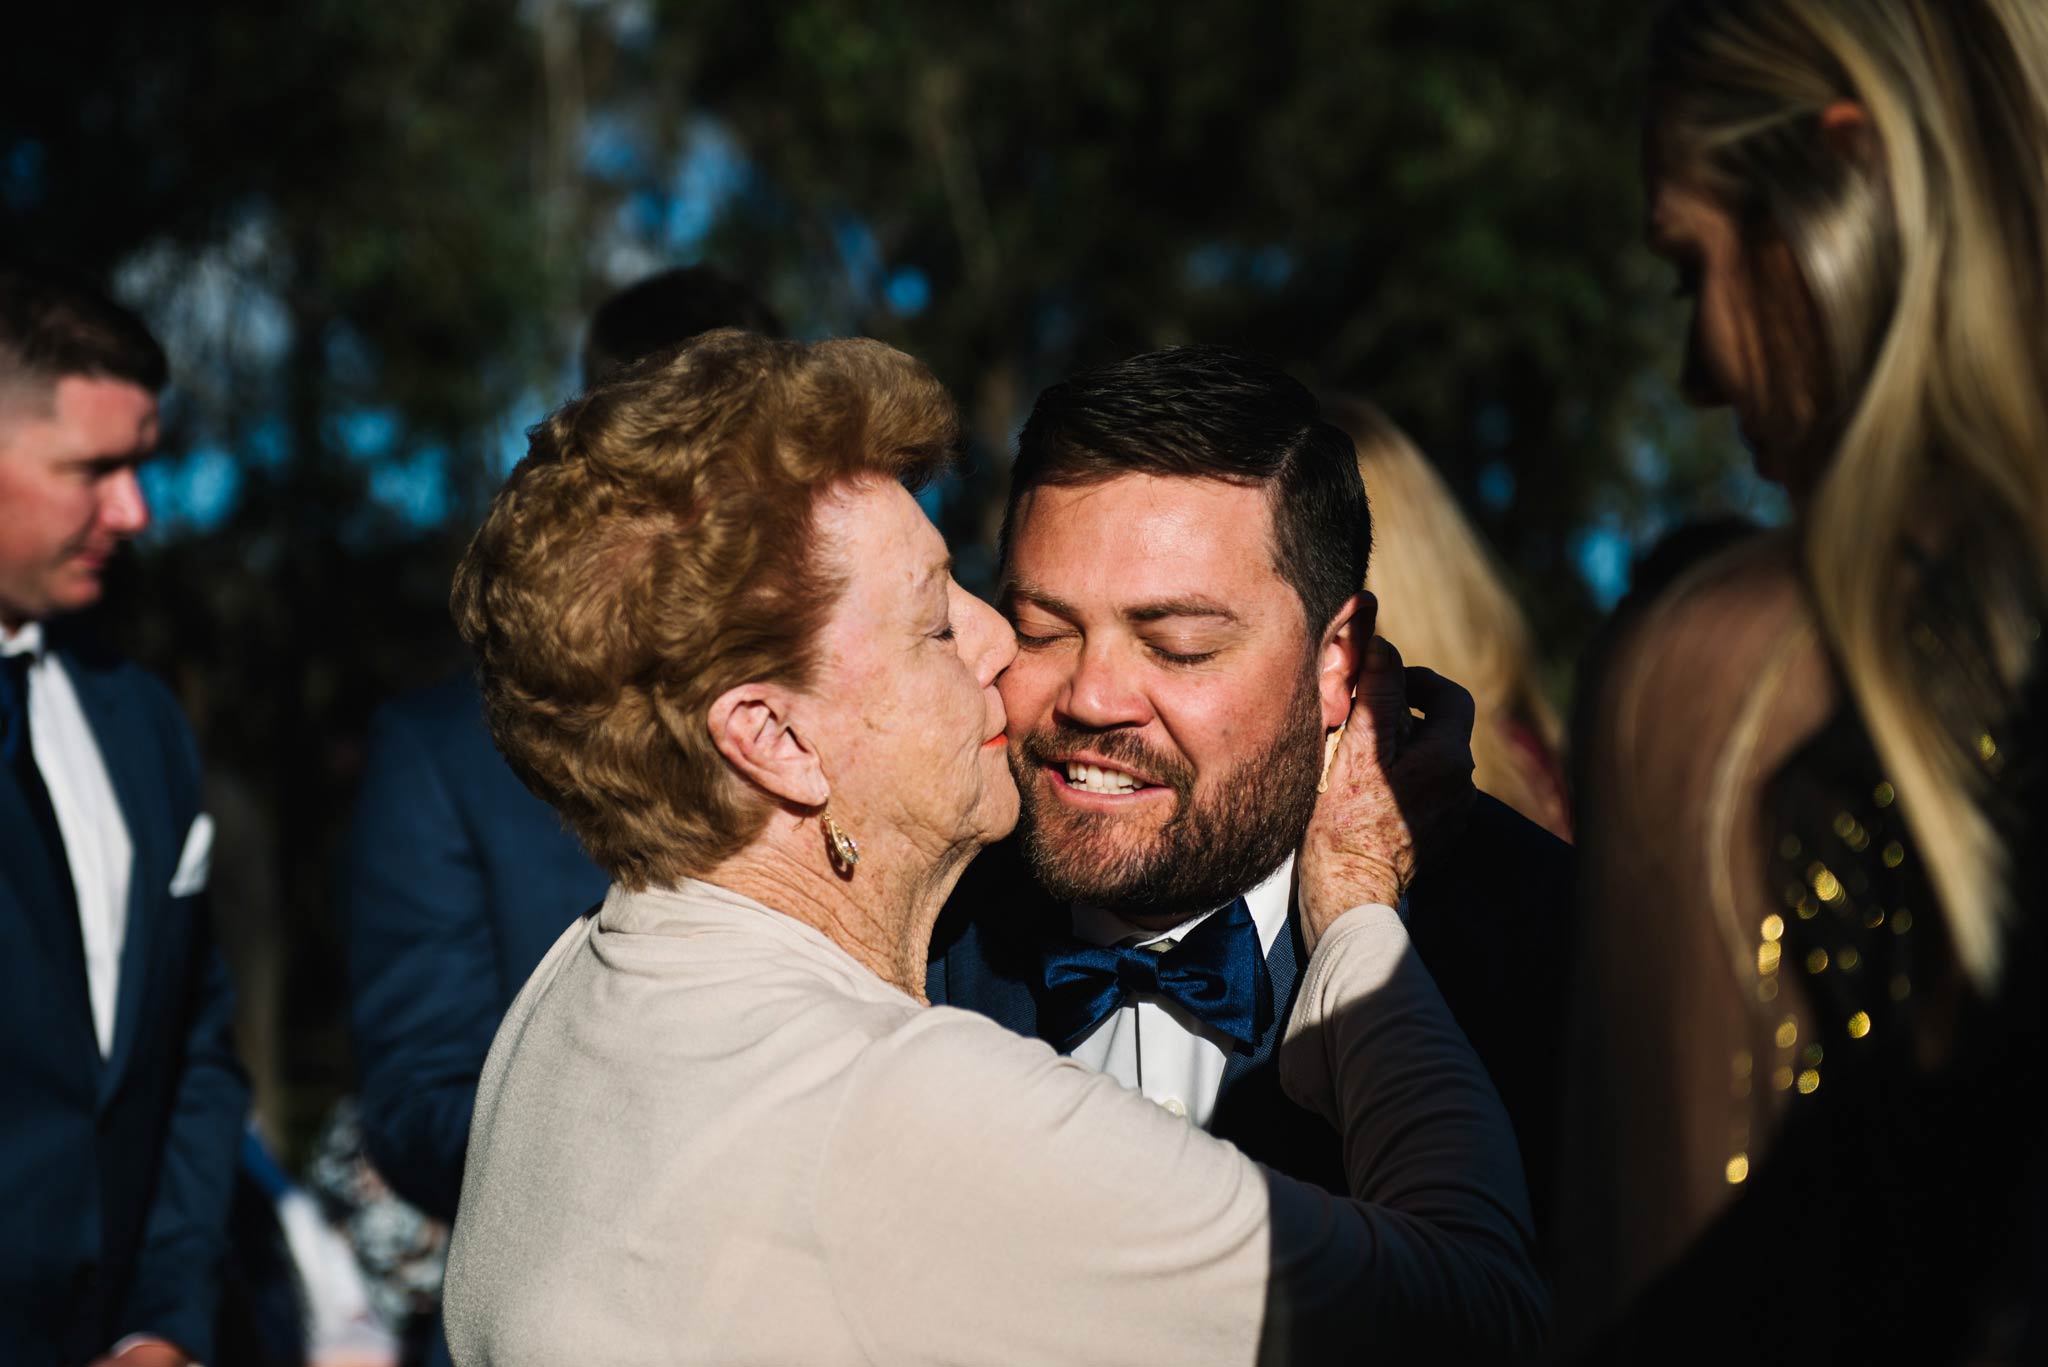 Grandma kisses groom on the cheek after wedding ceremony